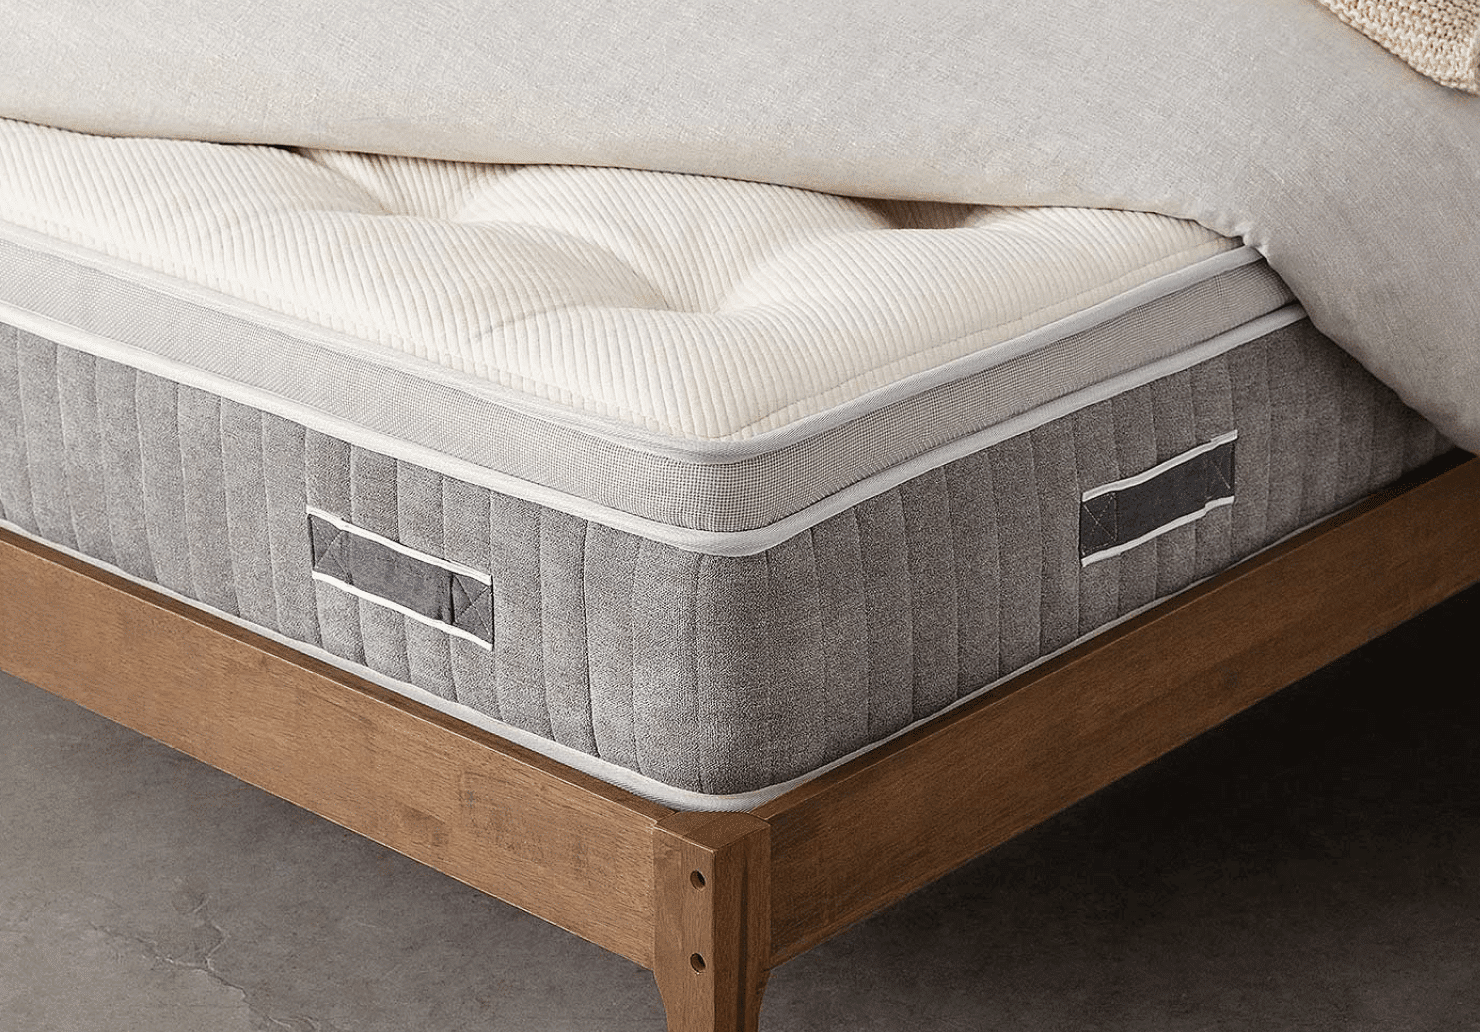 A good quality mattress, Bedroom Upgrade Ideas